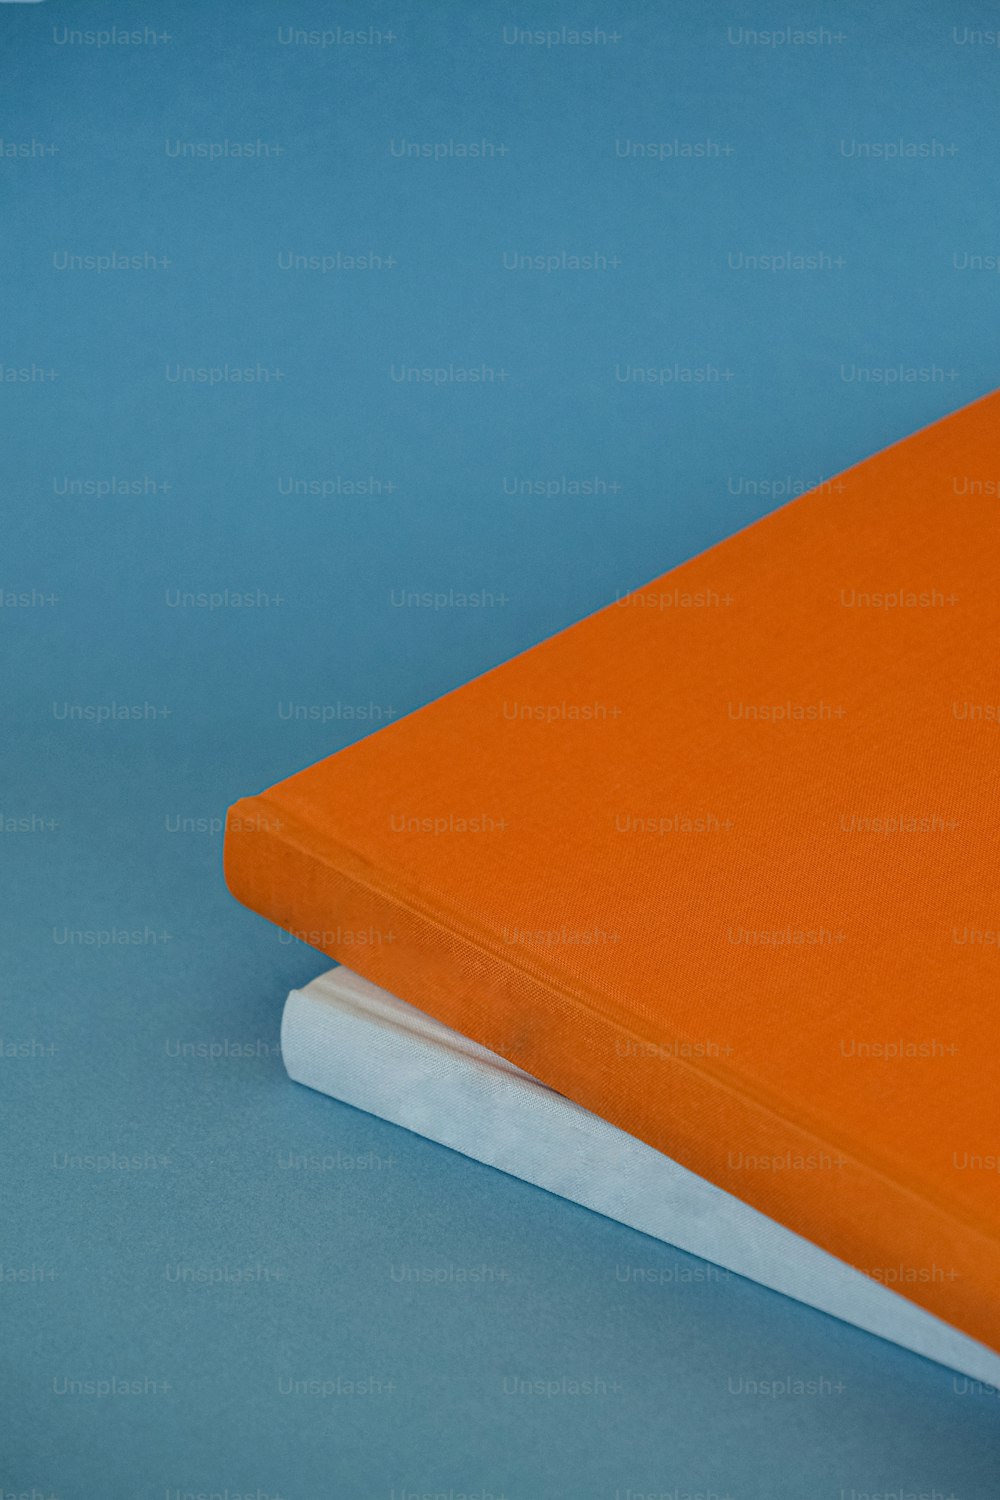 Un quaderno arancione seduto sopra un libro bianco